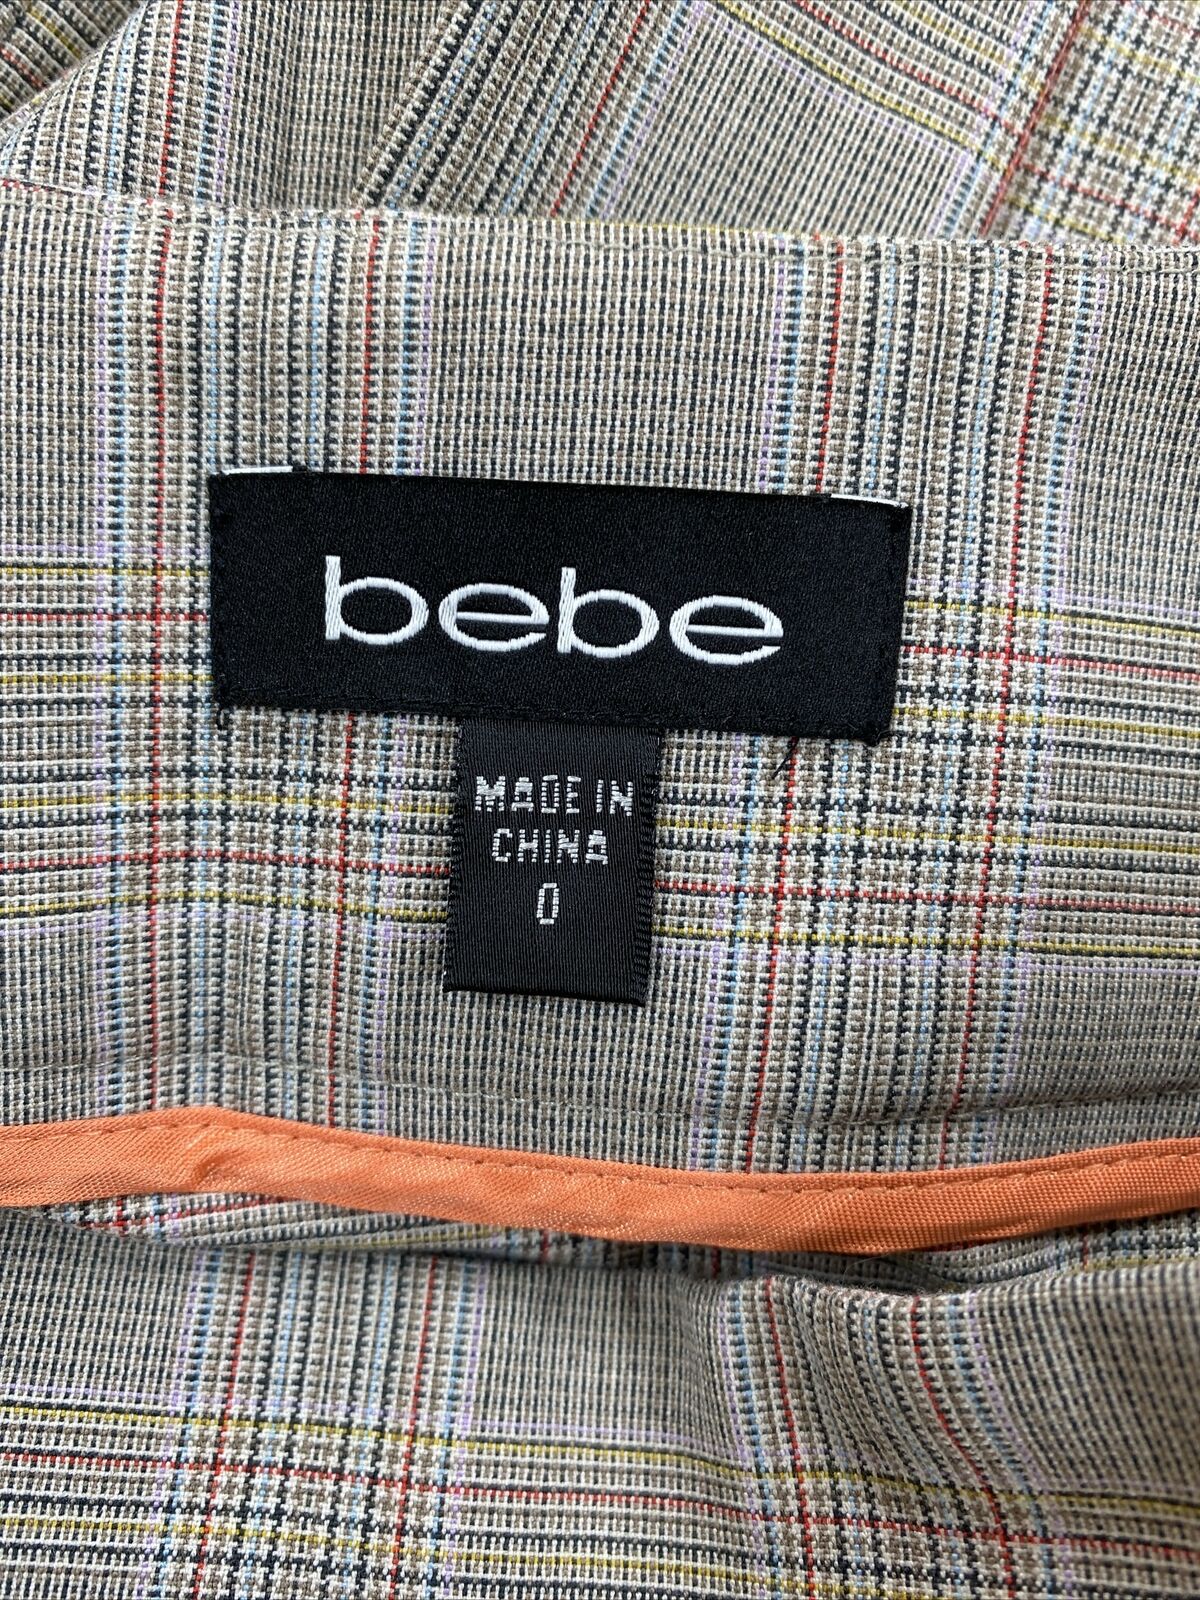 Bebe Women's Beige Plaid Pleated Mini Skirt - 0